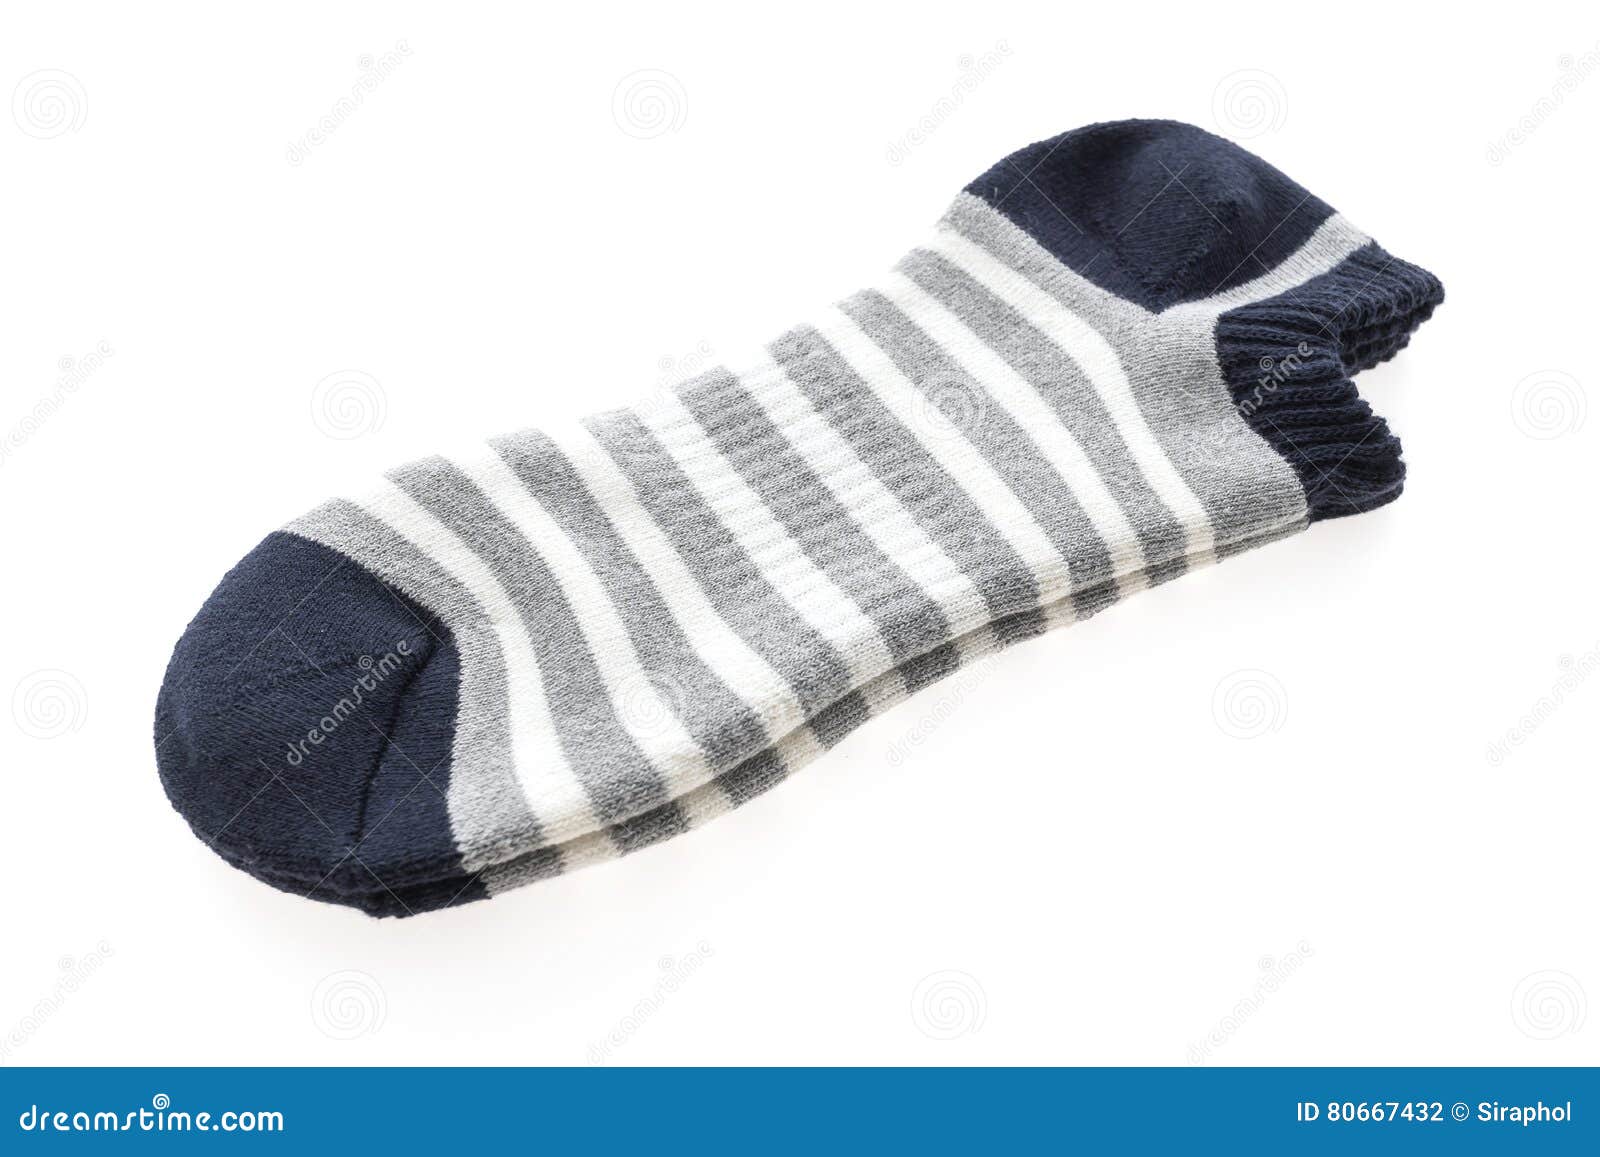 Sock isolated stock photo. Image of gray, socks, classic - 80667432